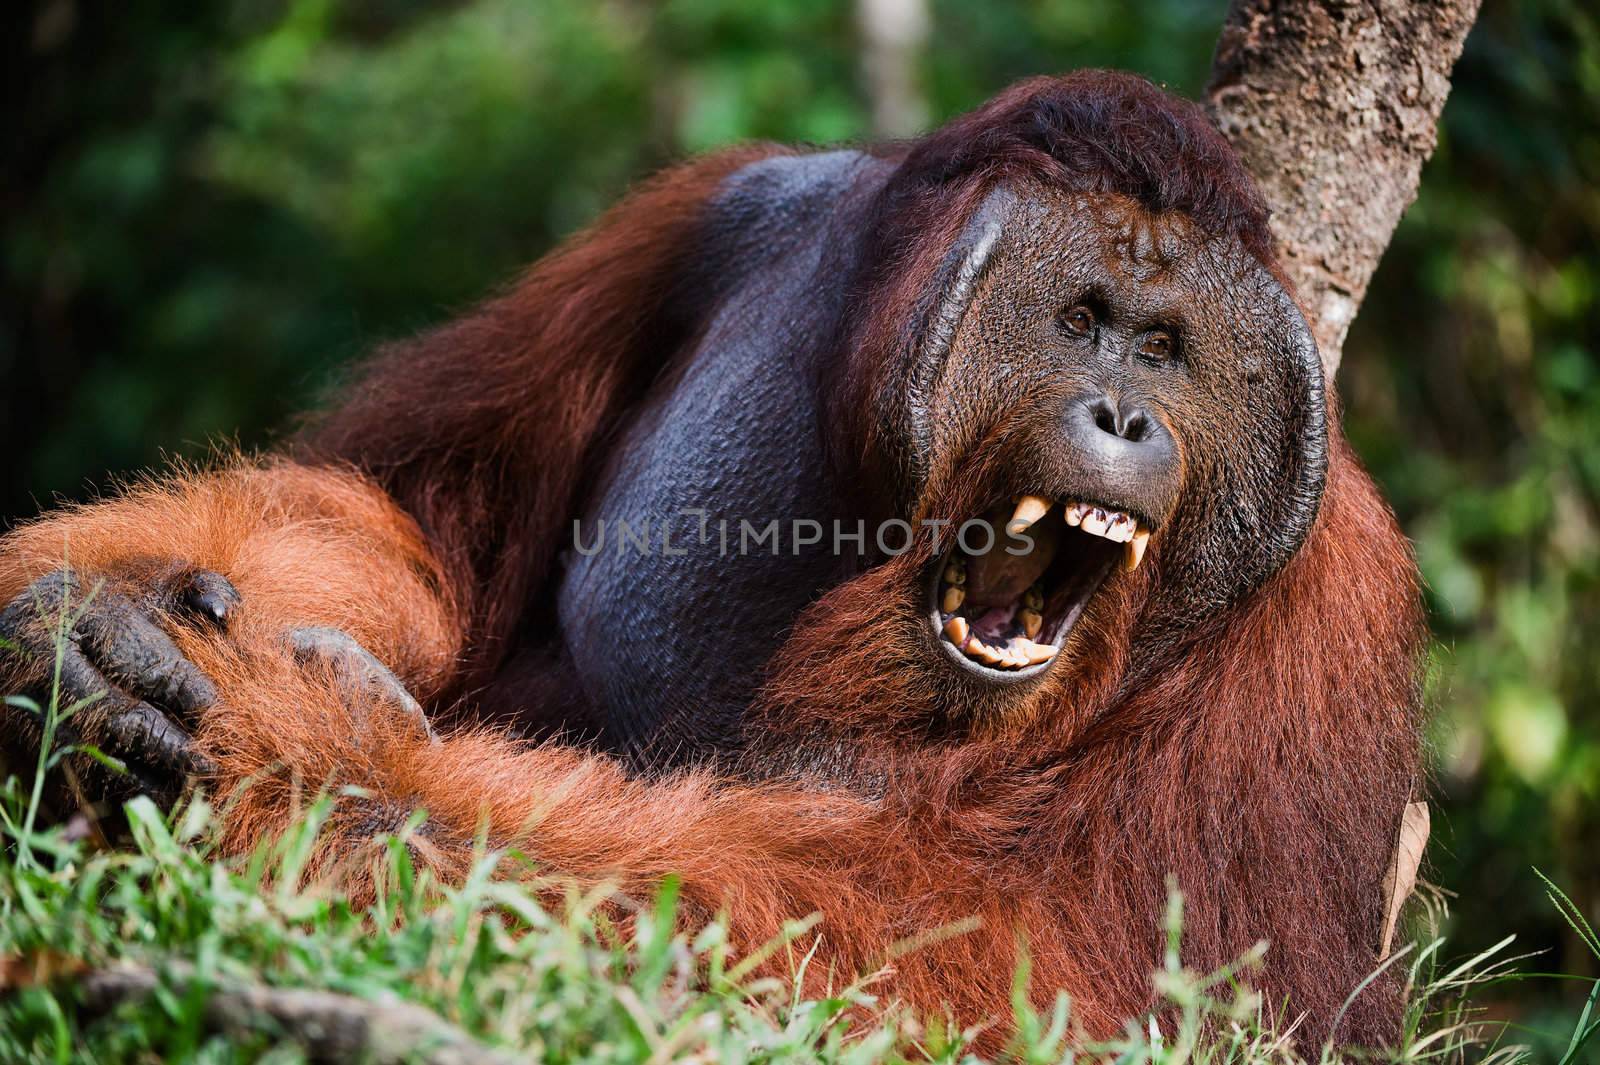 Indonesia, Borneo - Yawning Orangutan sitting on a tree